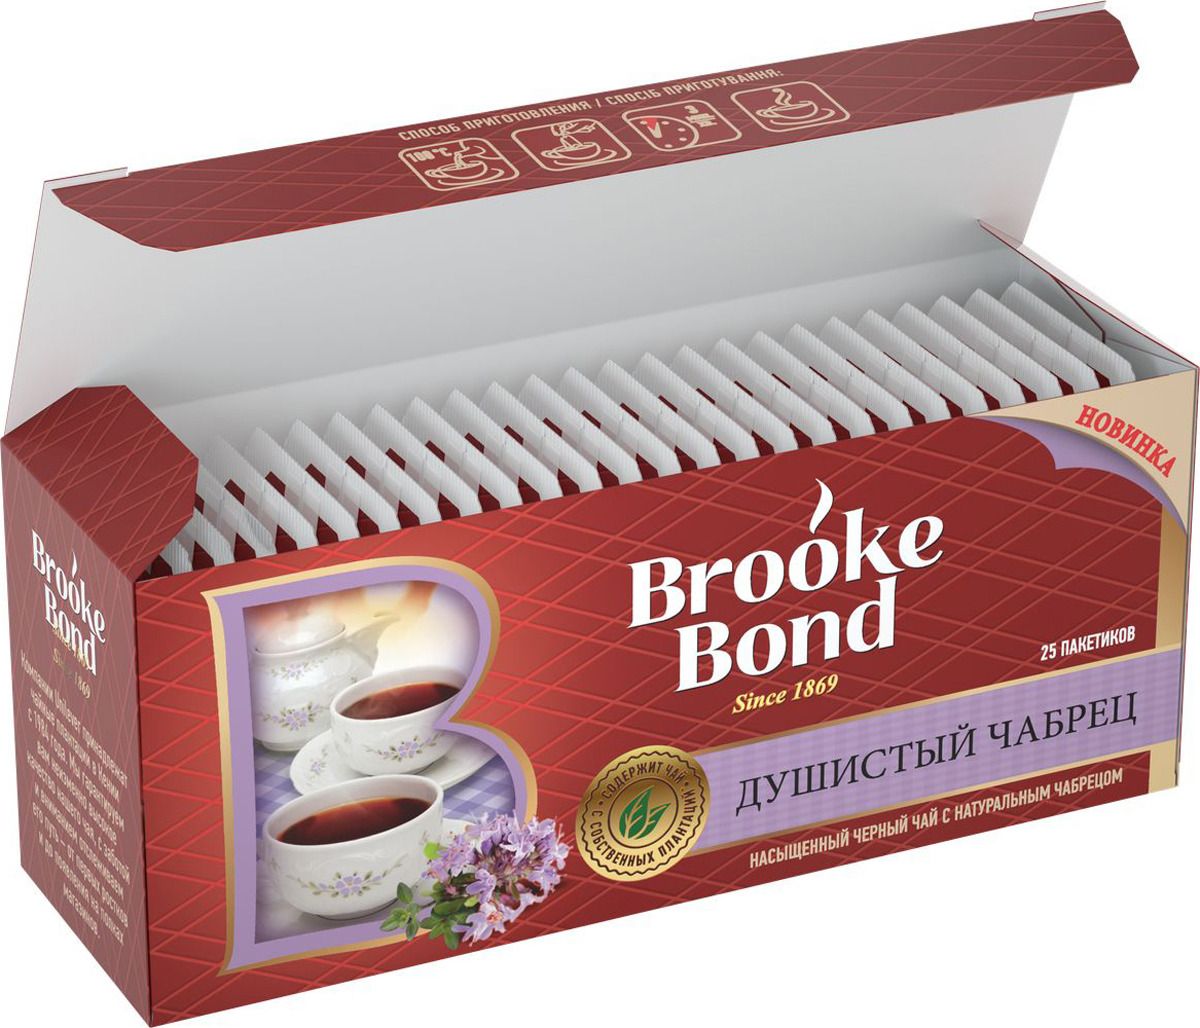    Brooke Bond 